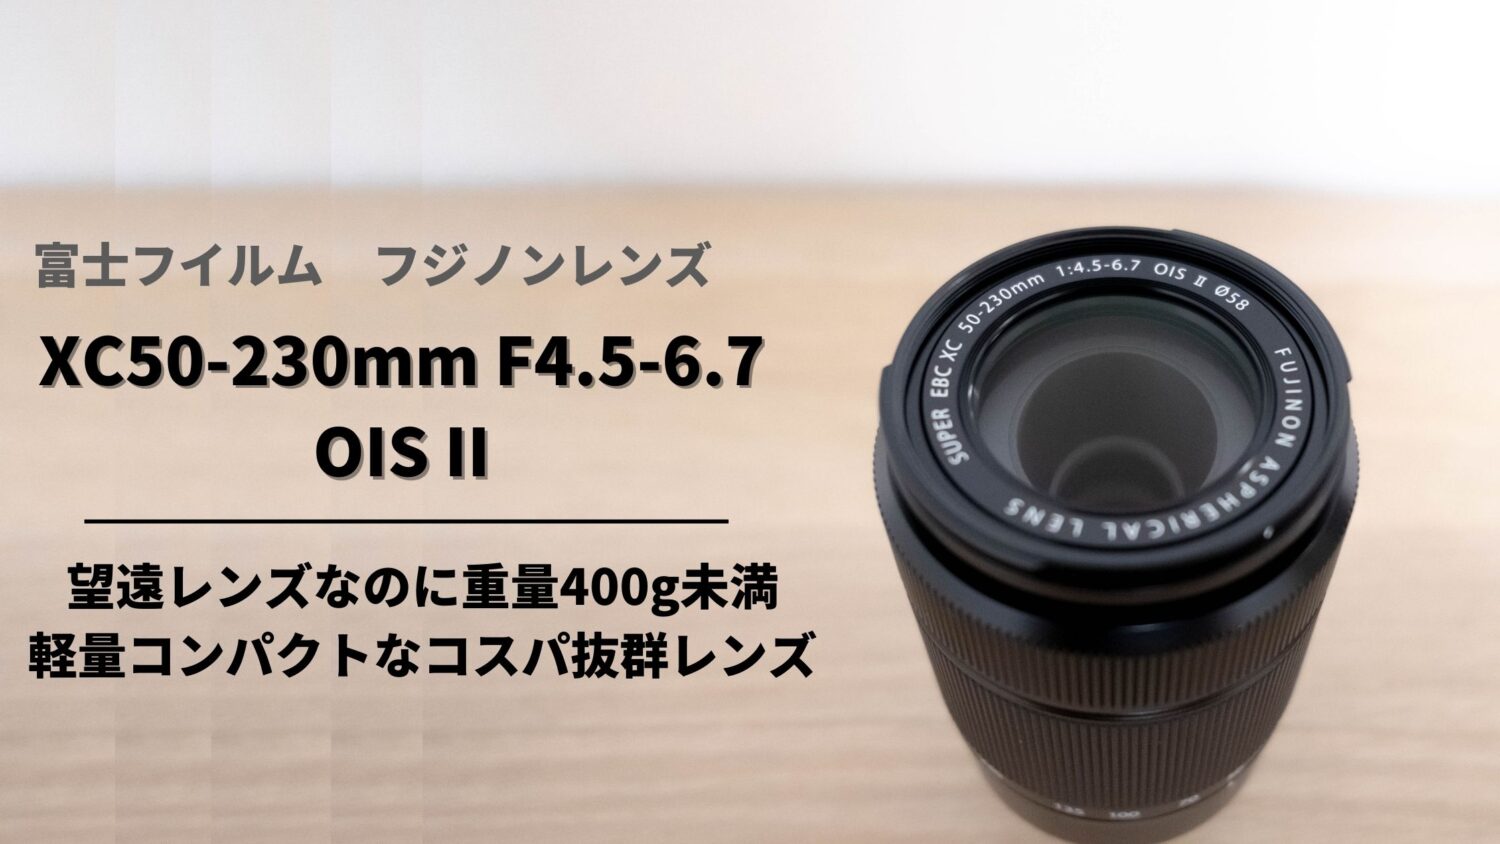 FUJIFILM 望遠ズームレンズ XC50-230mmF4.5-6.7OISII XC50230/F4.5-6.7